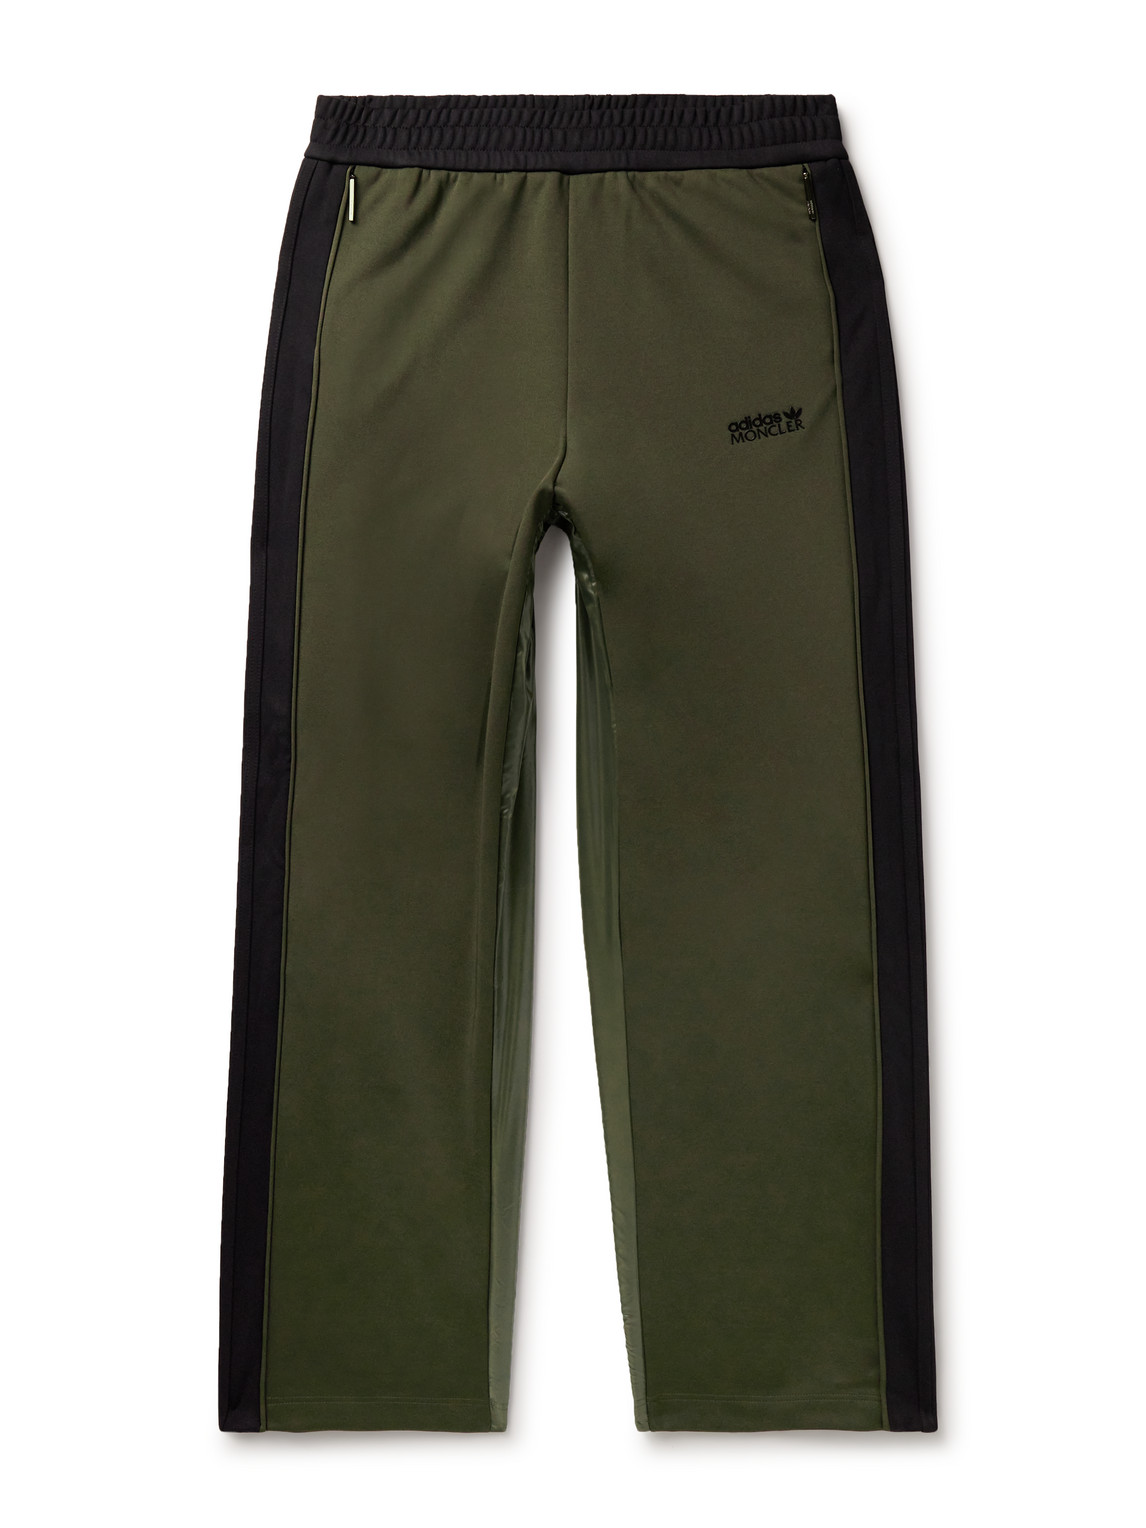 Moncler Genius - adidas Originals Straight-Leg Striped Tech-Jersey and Shell Sweatpants - Men - Green - M von Moncler Genius